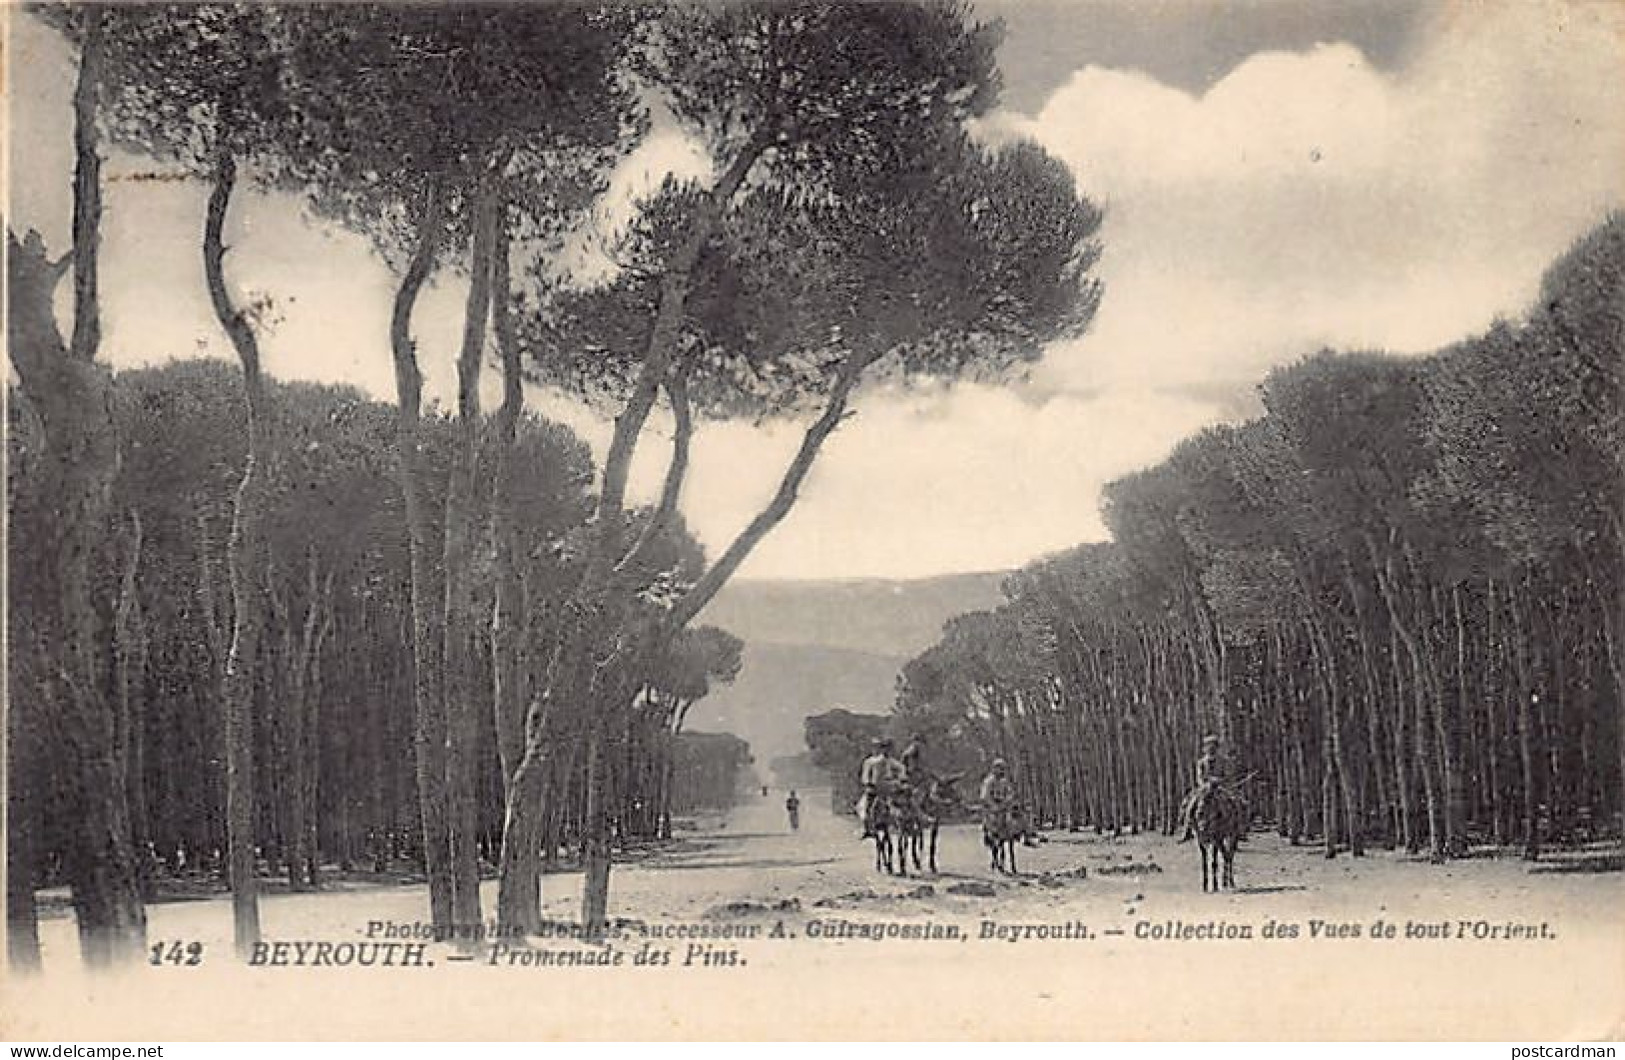 Liban - BEYROUTH - Promenade Des Pins - Ed. Photographie Bonfils, Successeur A. Guiragossian 142 - Liban